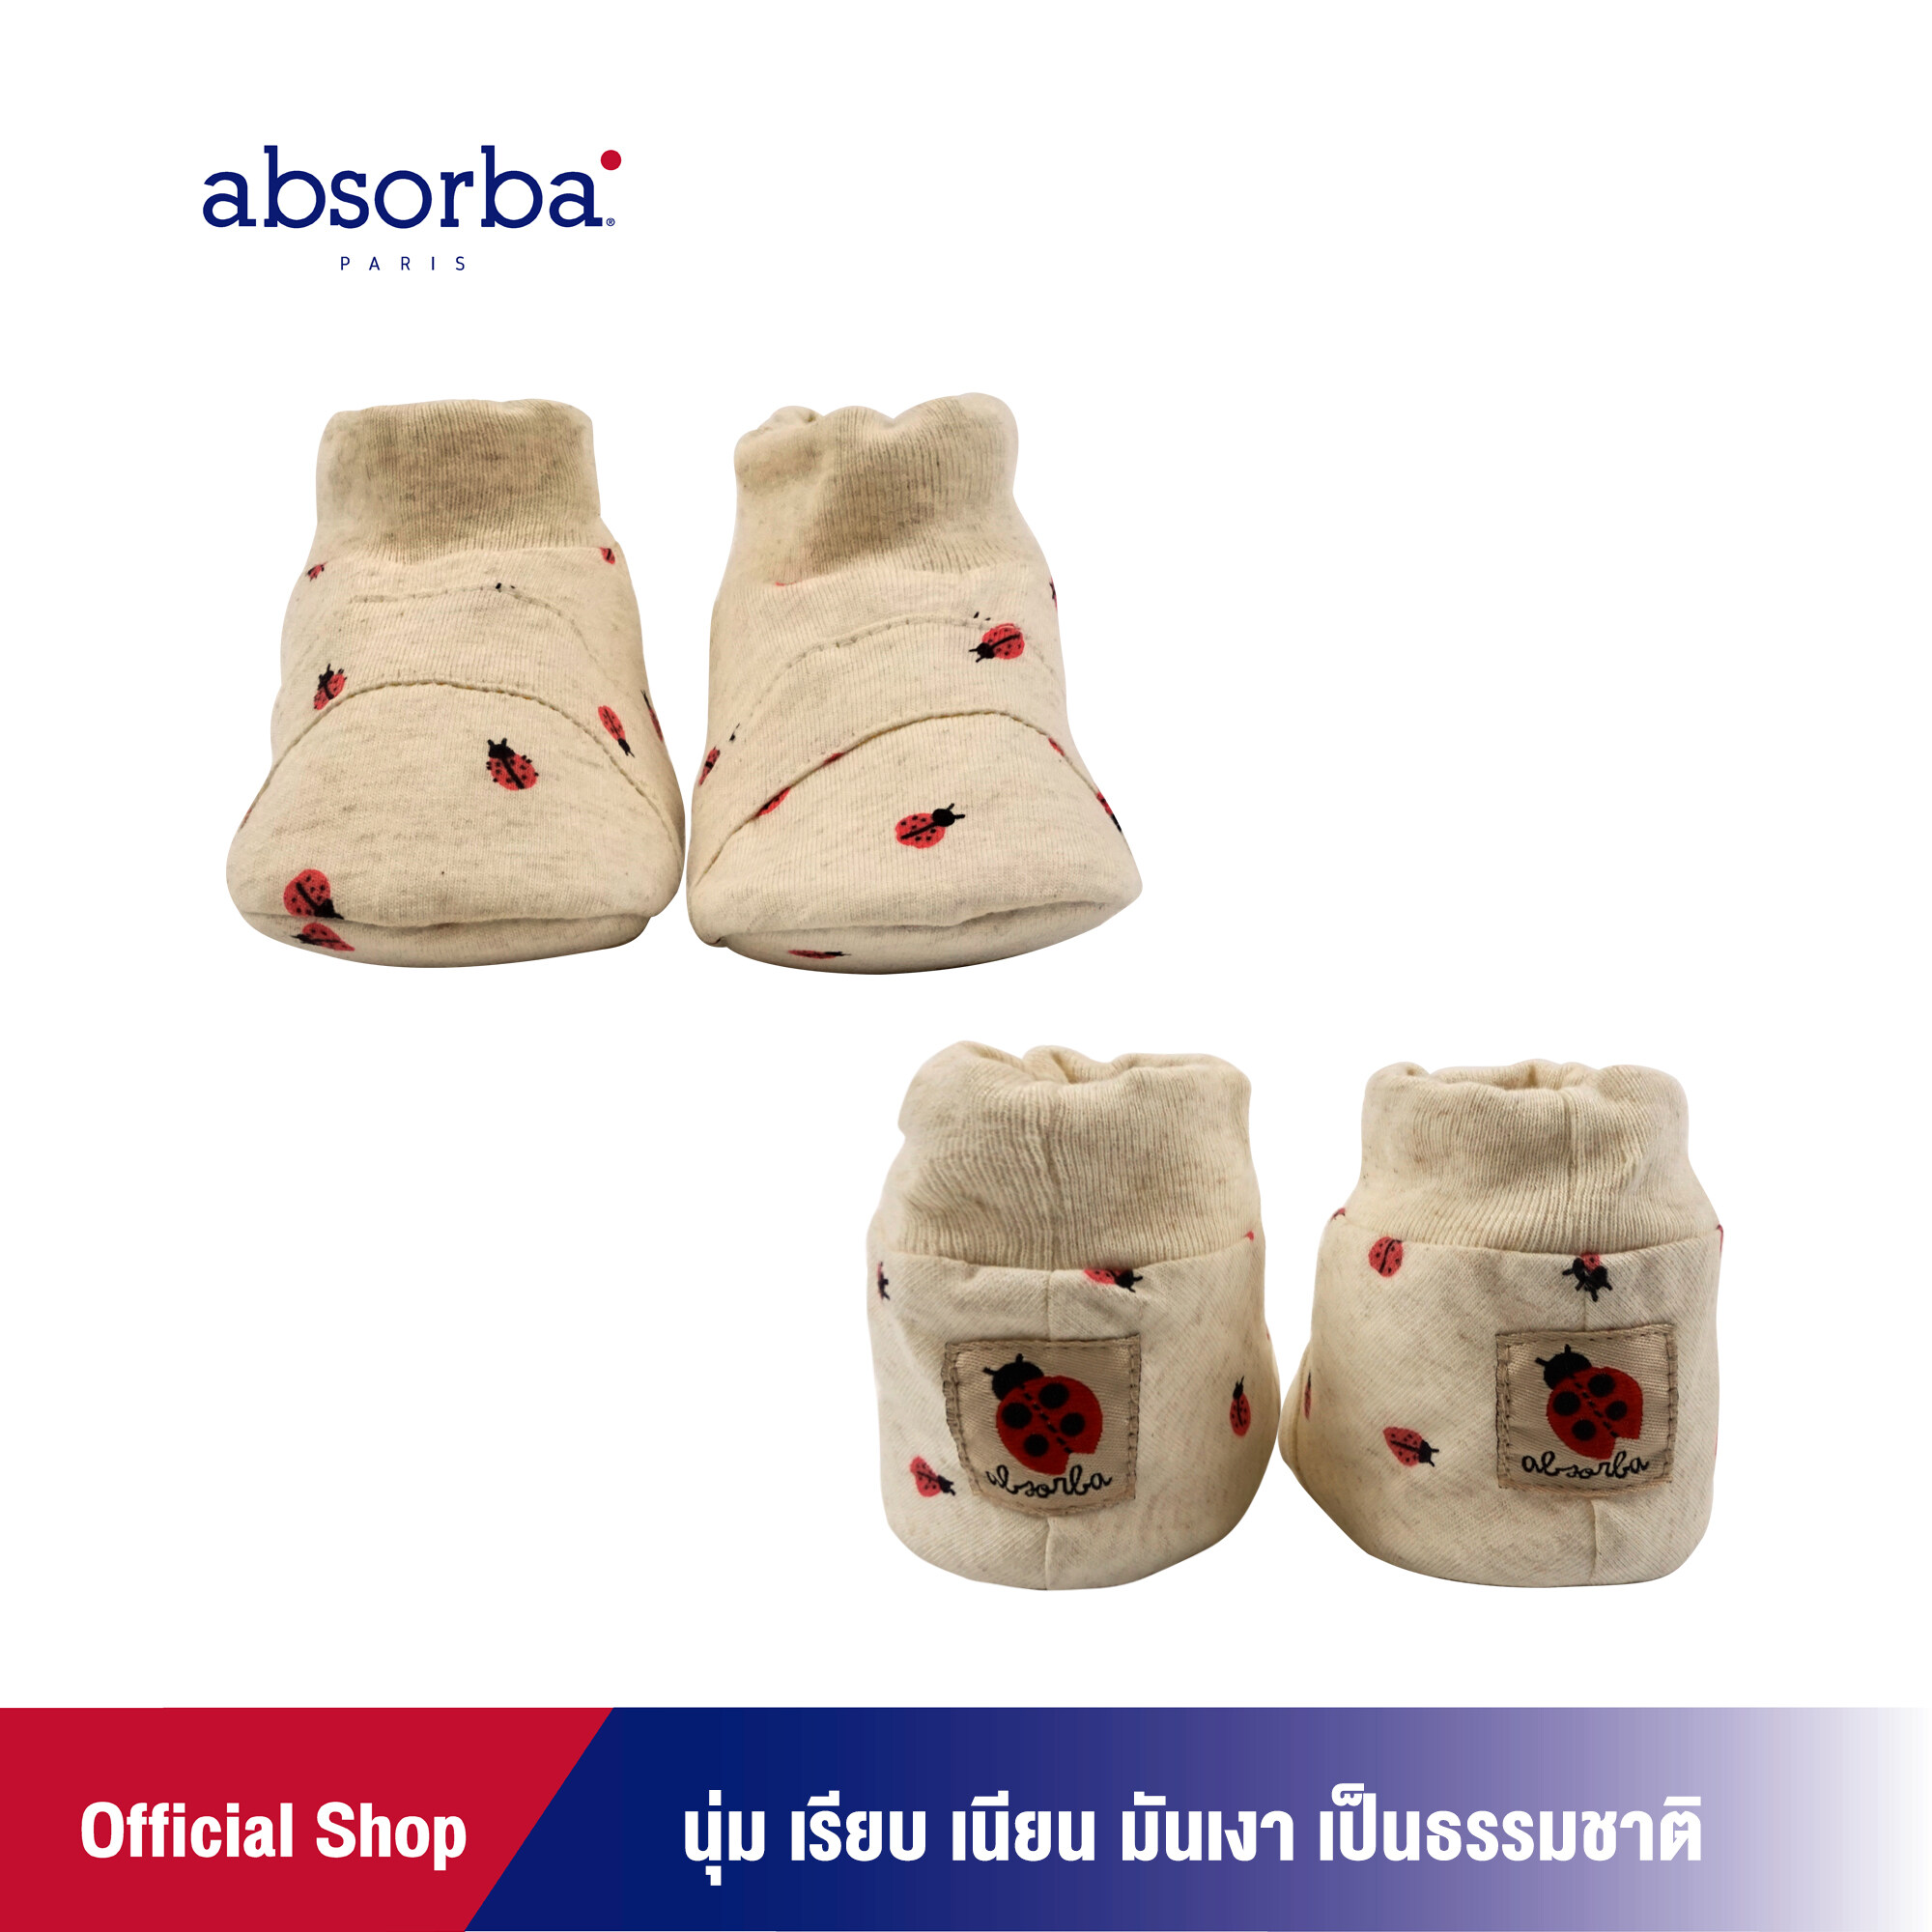 absorba(แอ็บซอร์บา)ถุงเท้าเด็กอ่อน คอลเลคชั่น JARDIN สำหรับเด็กแรกเกิดขึ้นไป แพ็ค 1 คู่ - R1E8014FA00